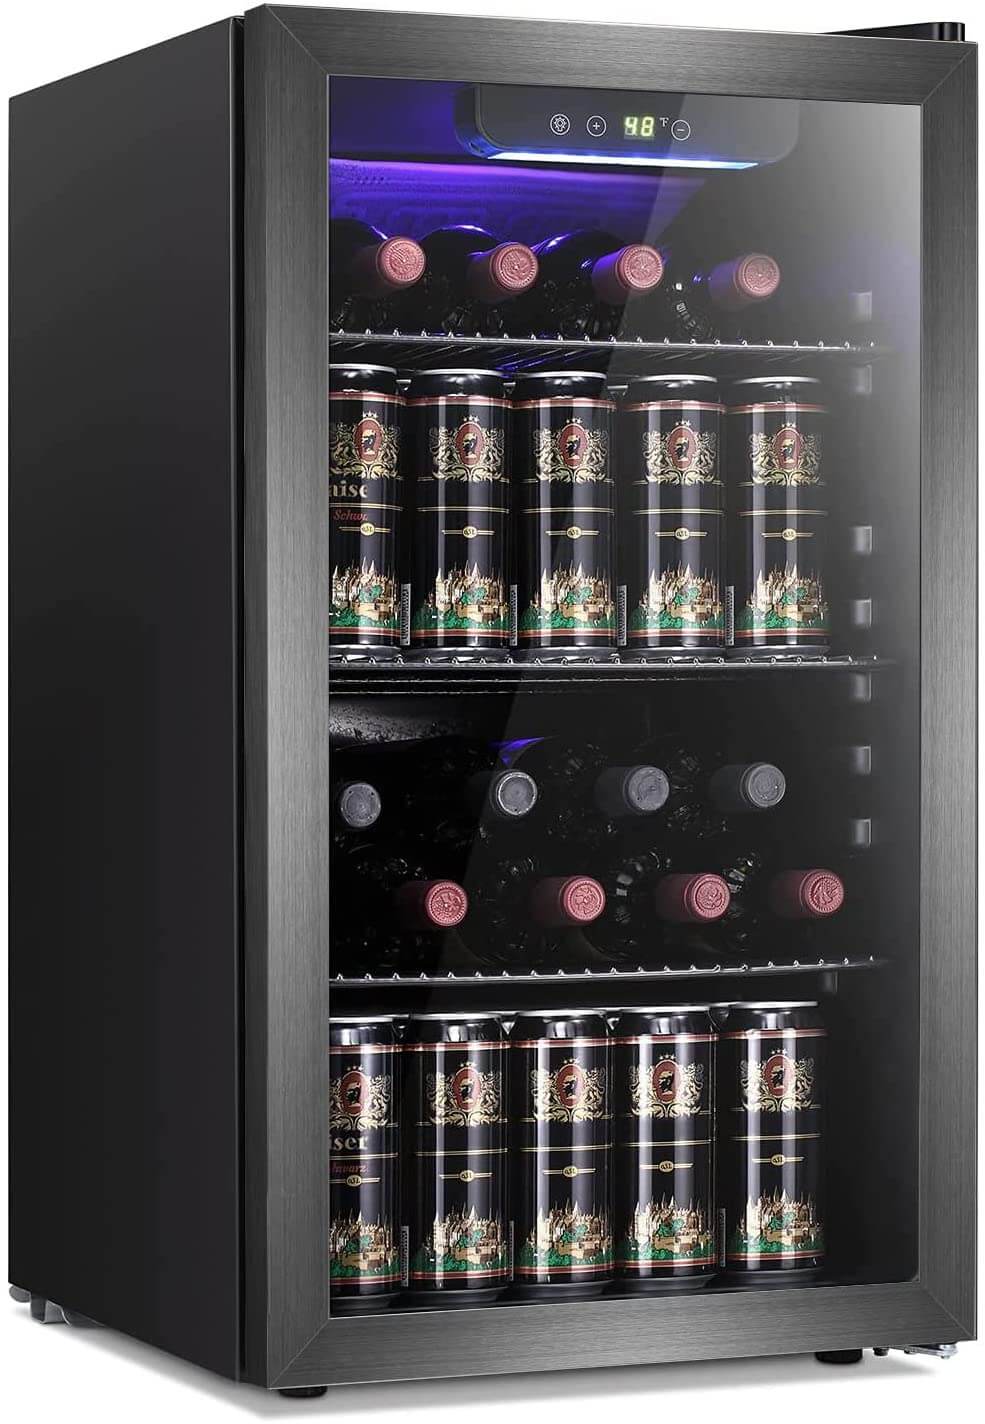 Antarctic Star Beverage Beer Refrigerator